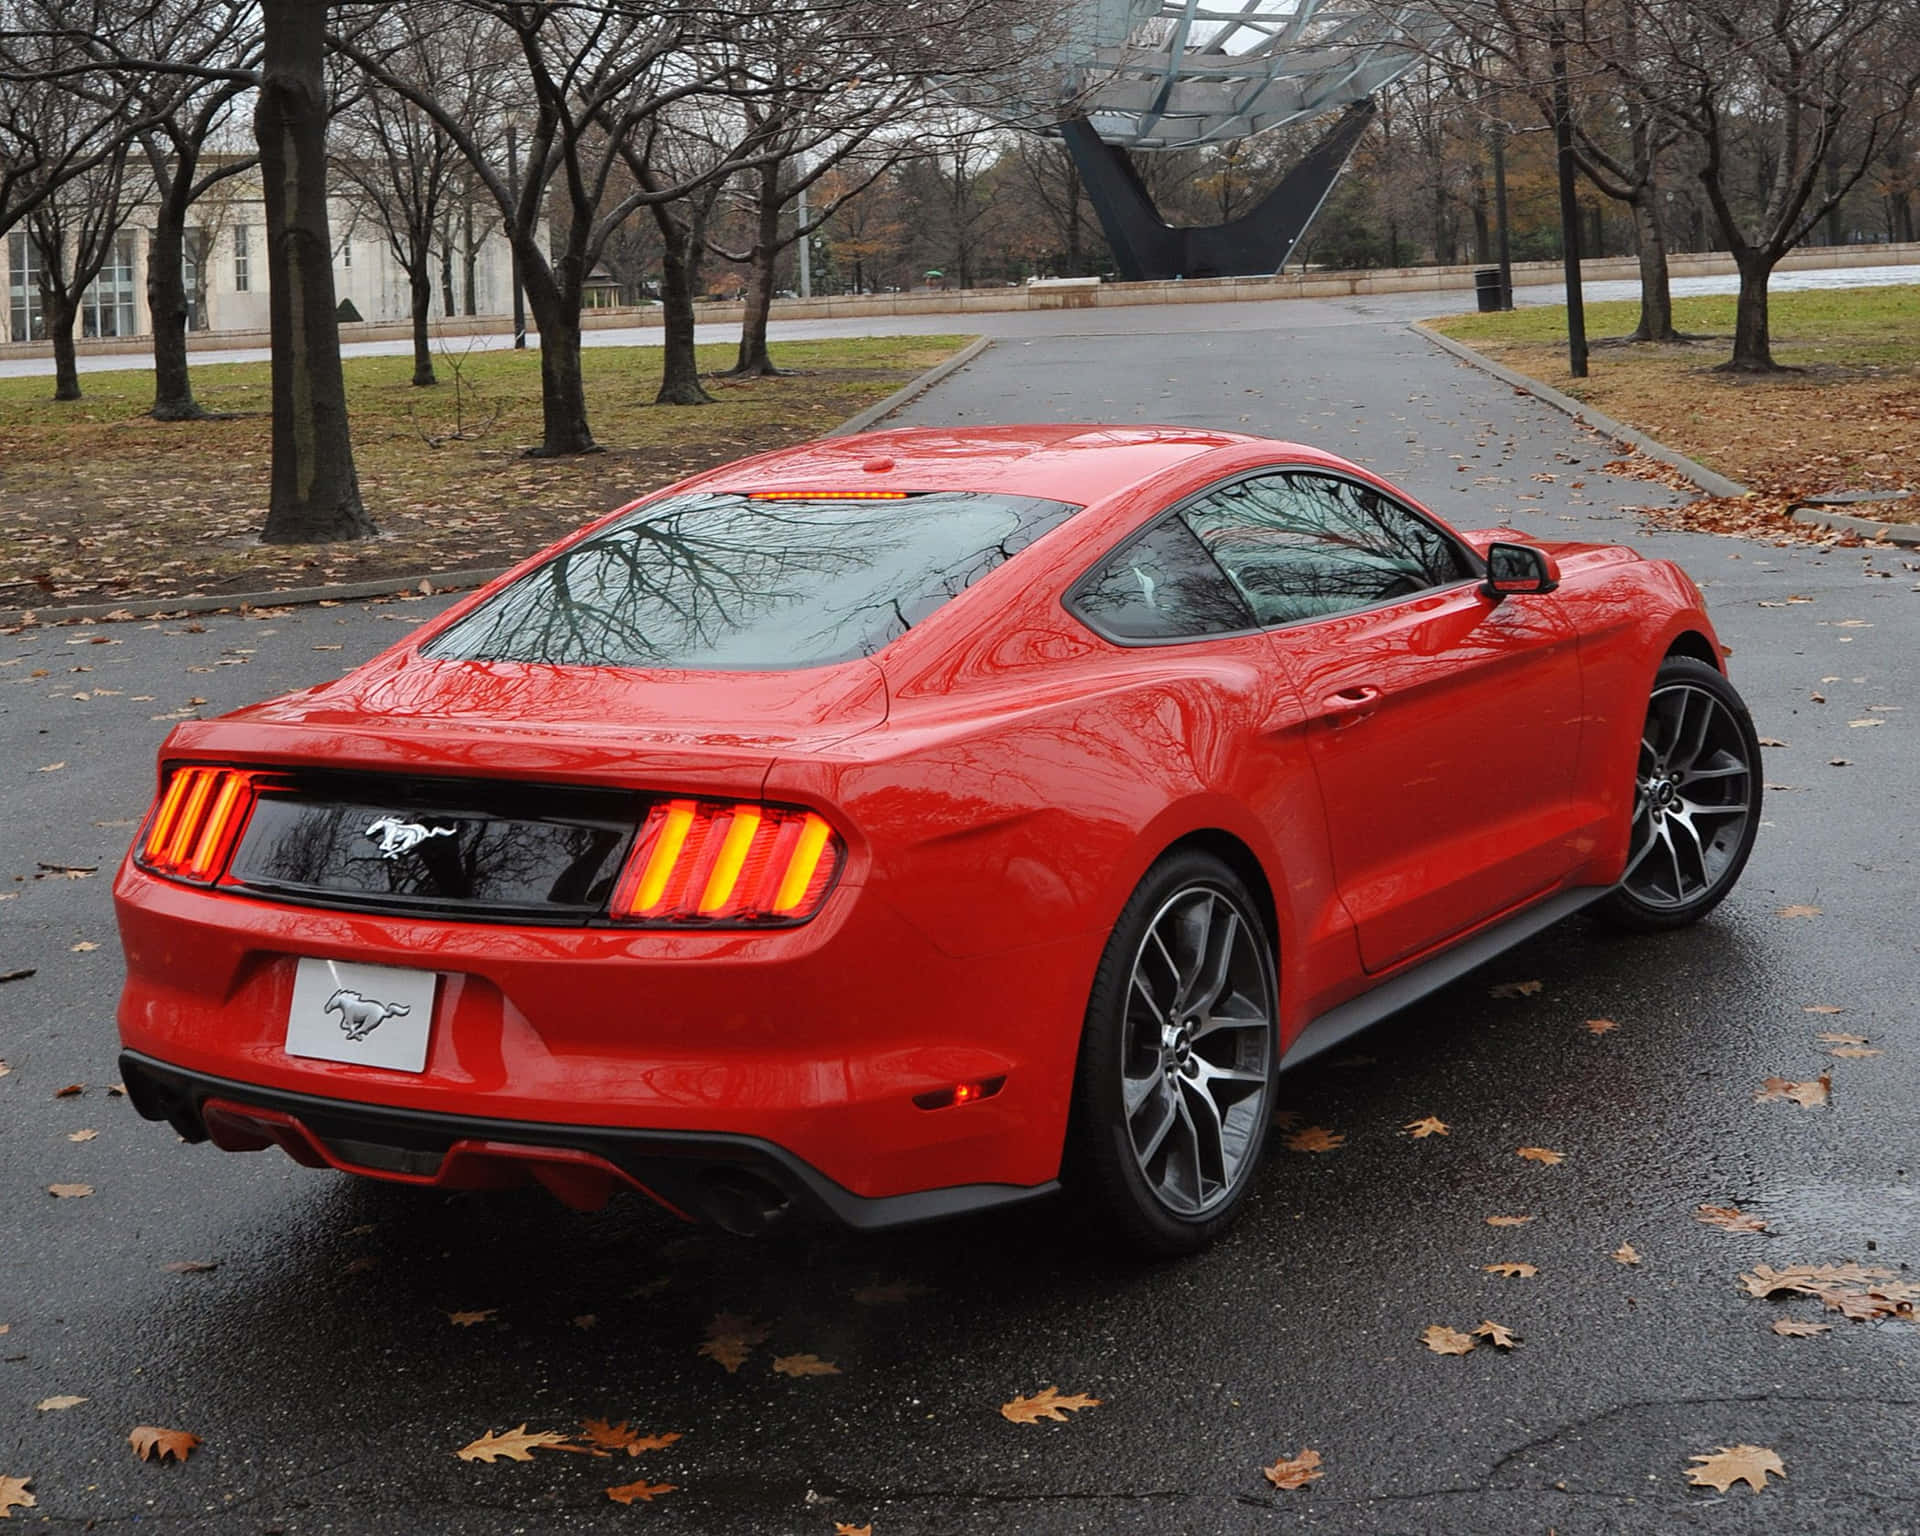 Красный 2015. Ford Mustang 2015 красный. Форд Мустанг 2015. Ford Mustang gt 2015 красный. Новый Форд Мустанг 2015.